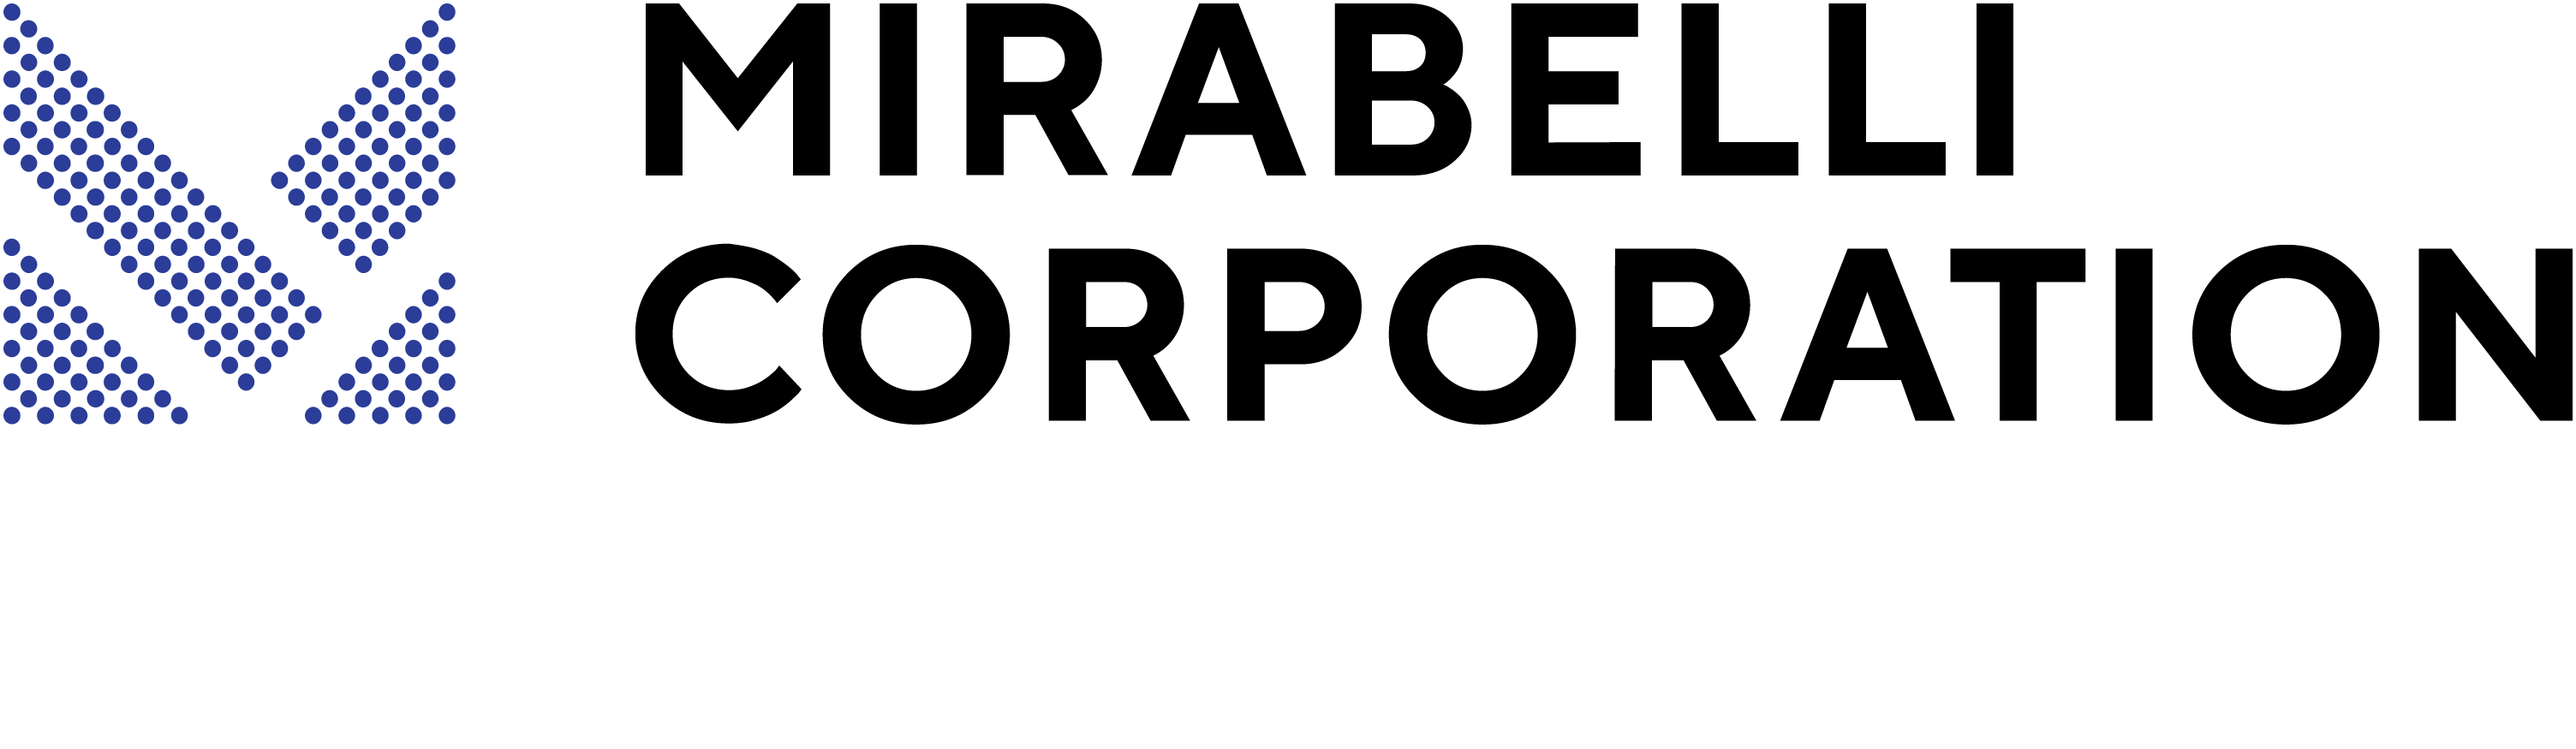 Mirabelli Corporation Logo